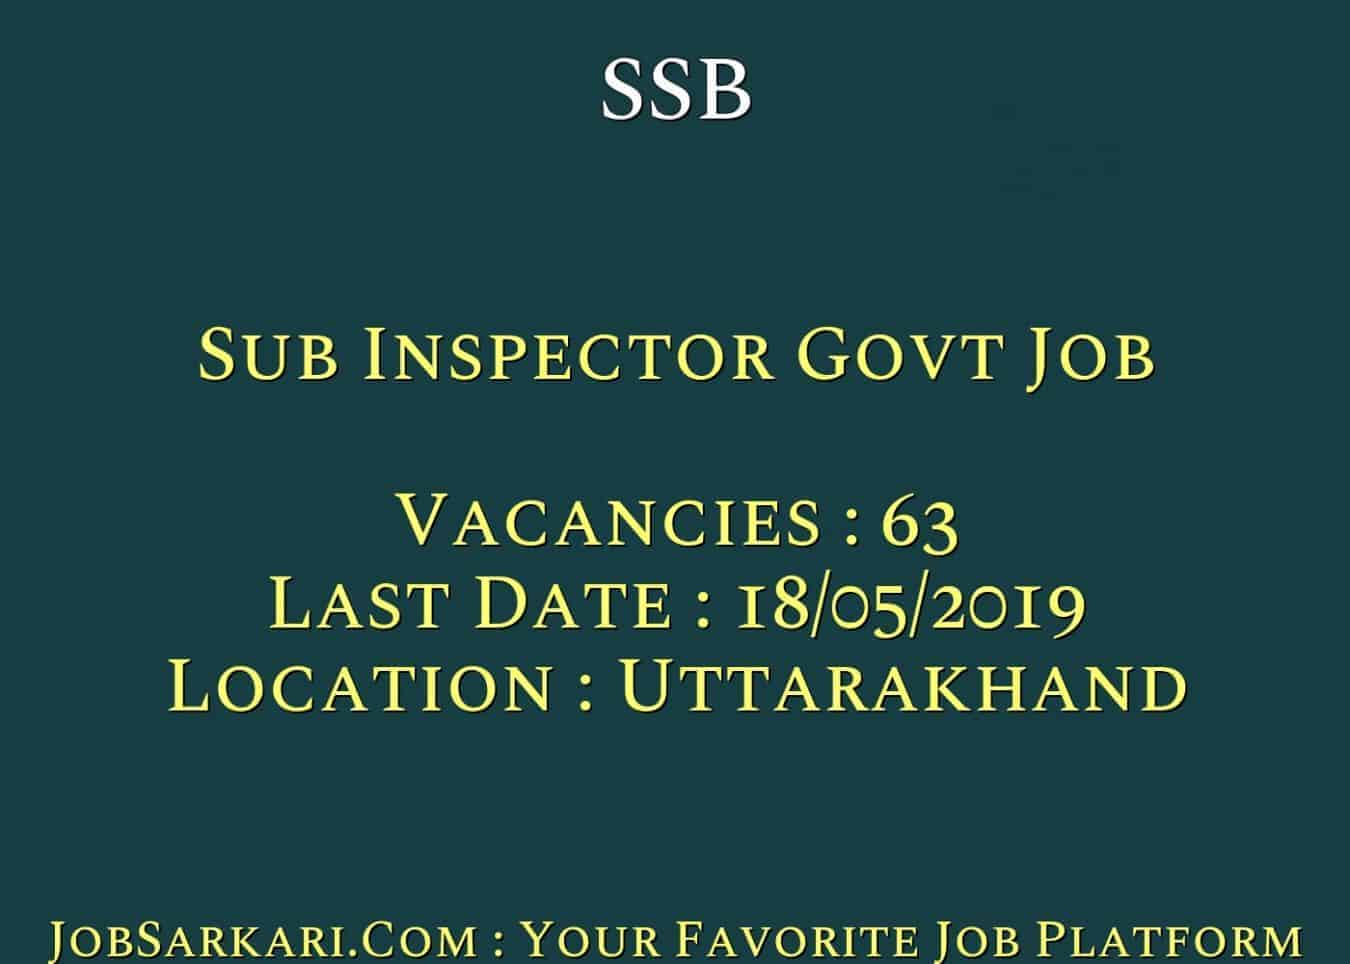 SSB Recruitment 2019 For Sub Inspector Govt Job